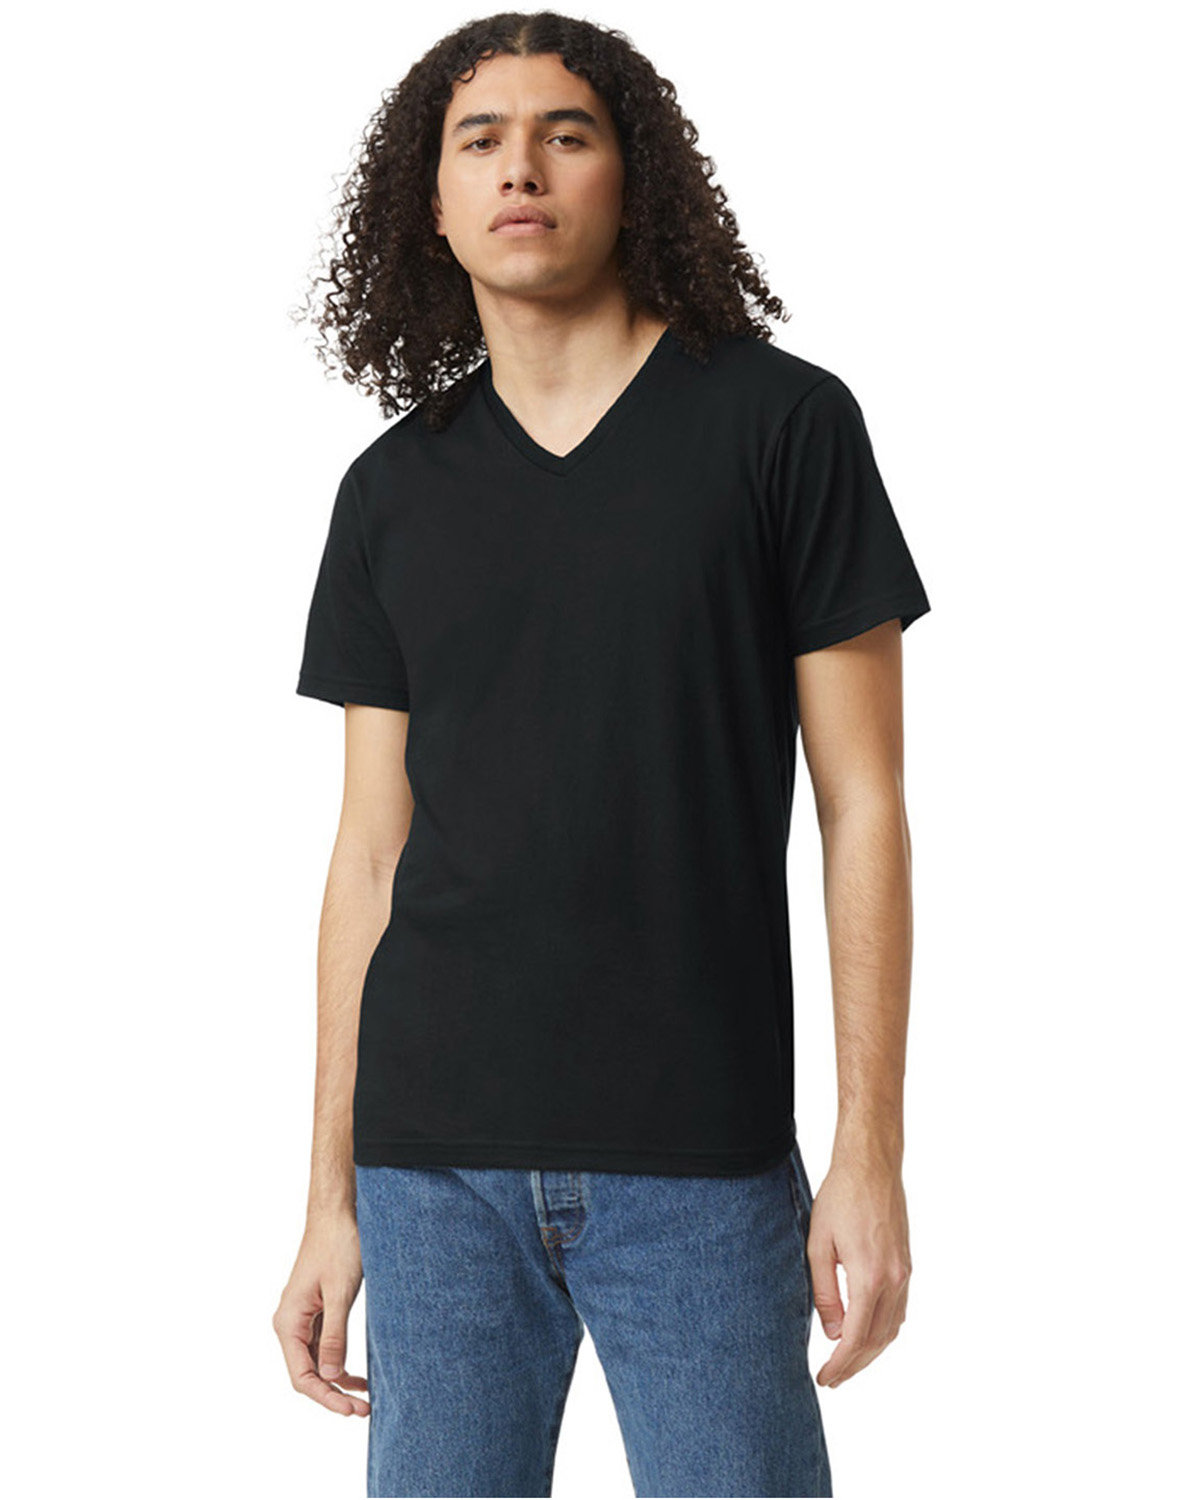 American Apparel Unisex CVC V-Neck T-Shirt BLACK 